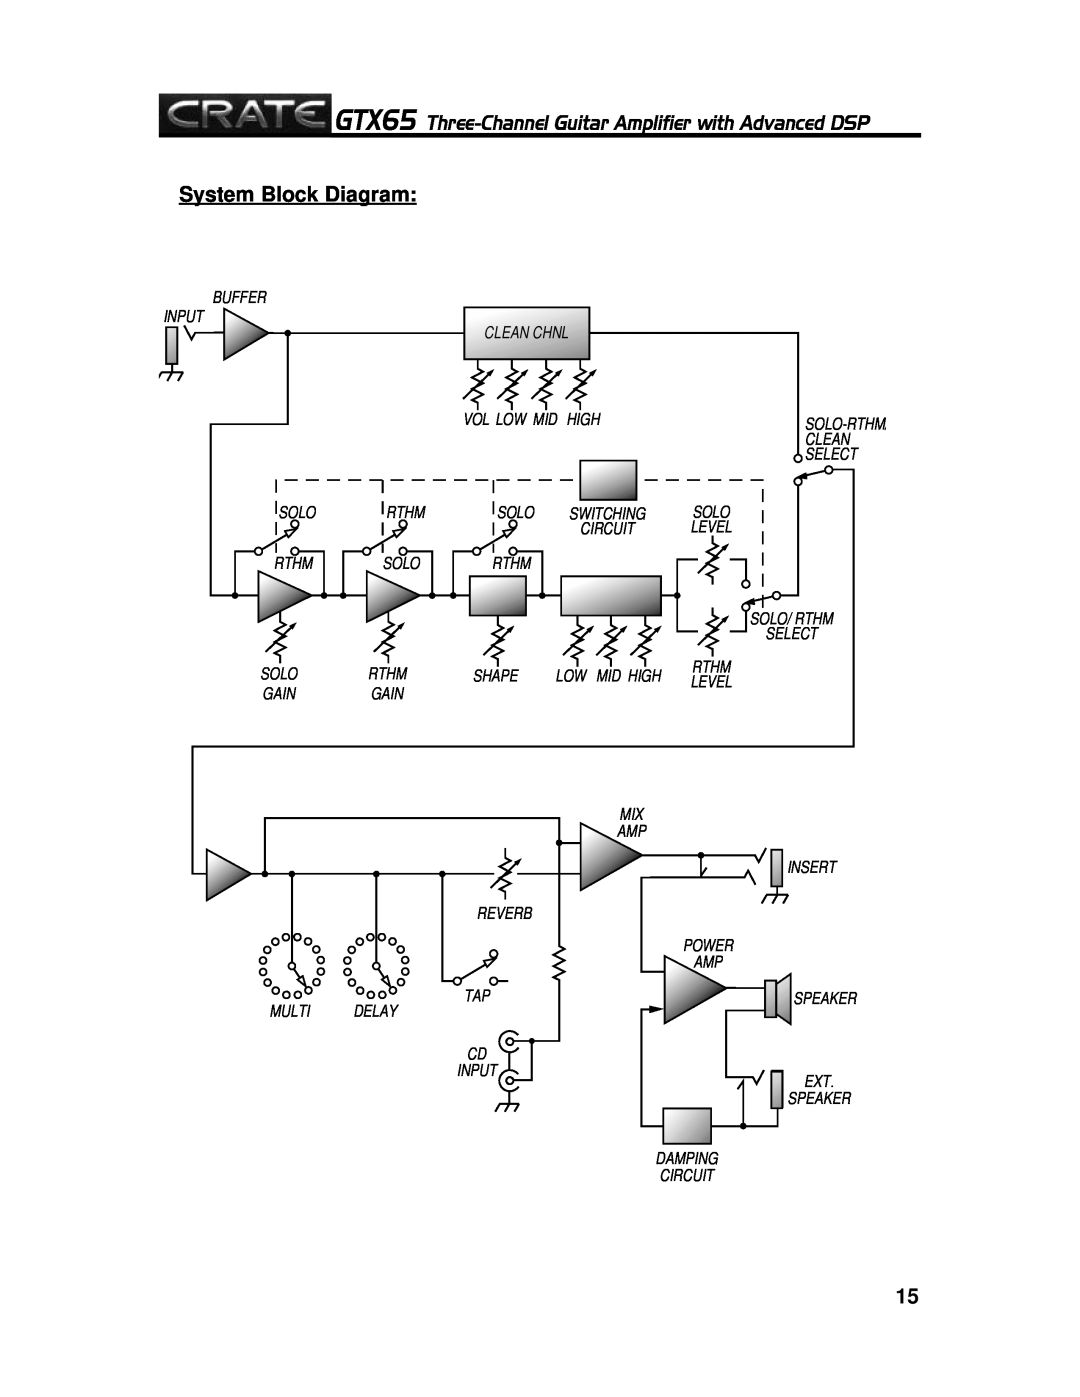 Crate Amplifiers GTX65 manual System Block Diagram 